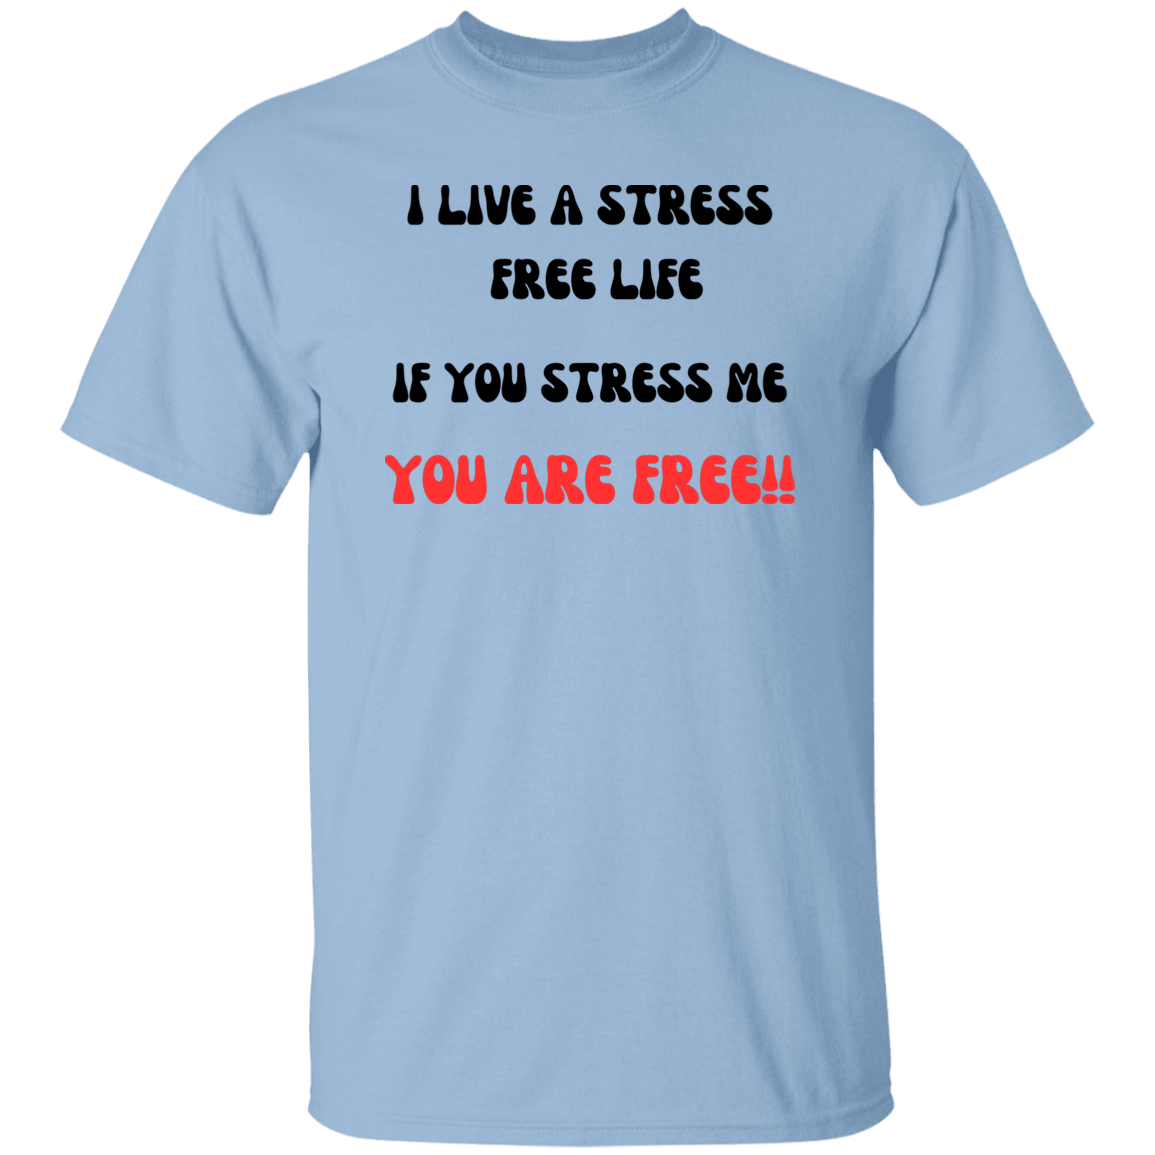 i Live a Stress free Life T-Shirt